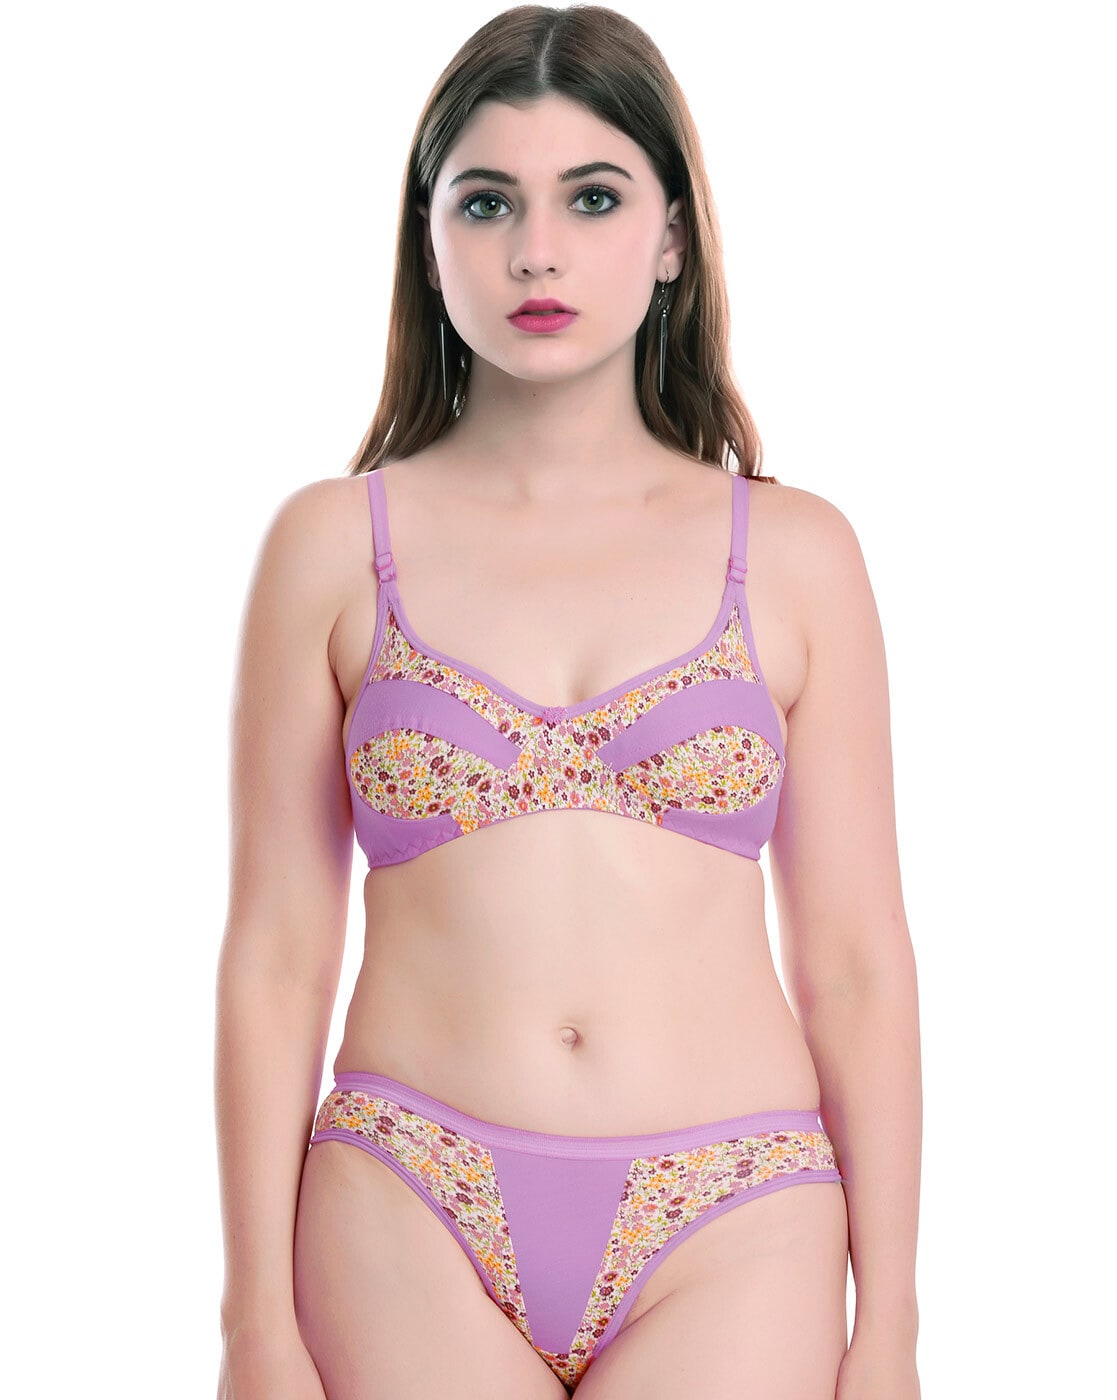 Purple Lingerie For Women Online – Buy Purple Lingerie Online in India